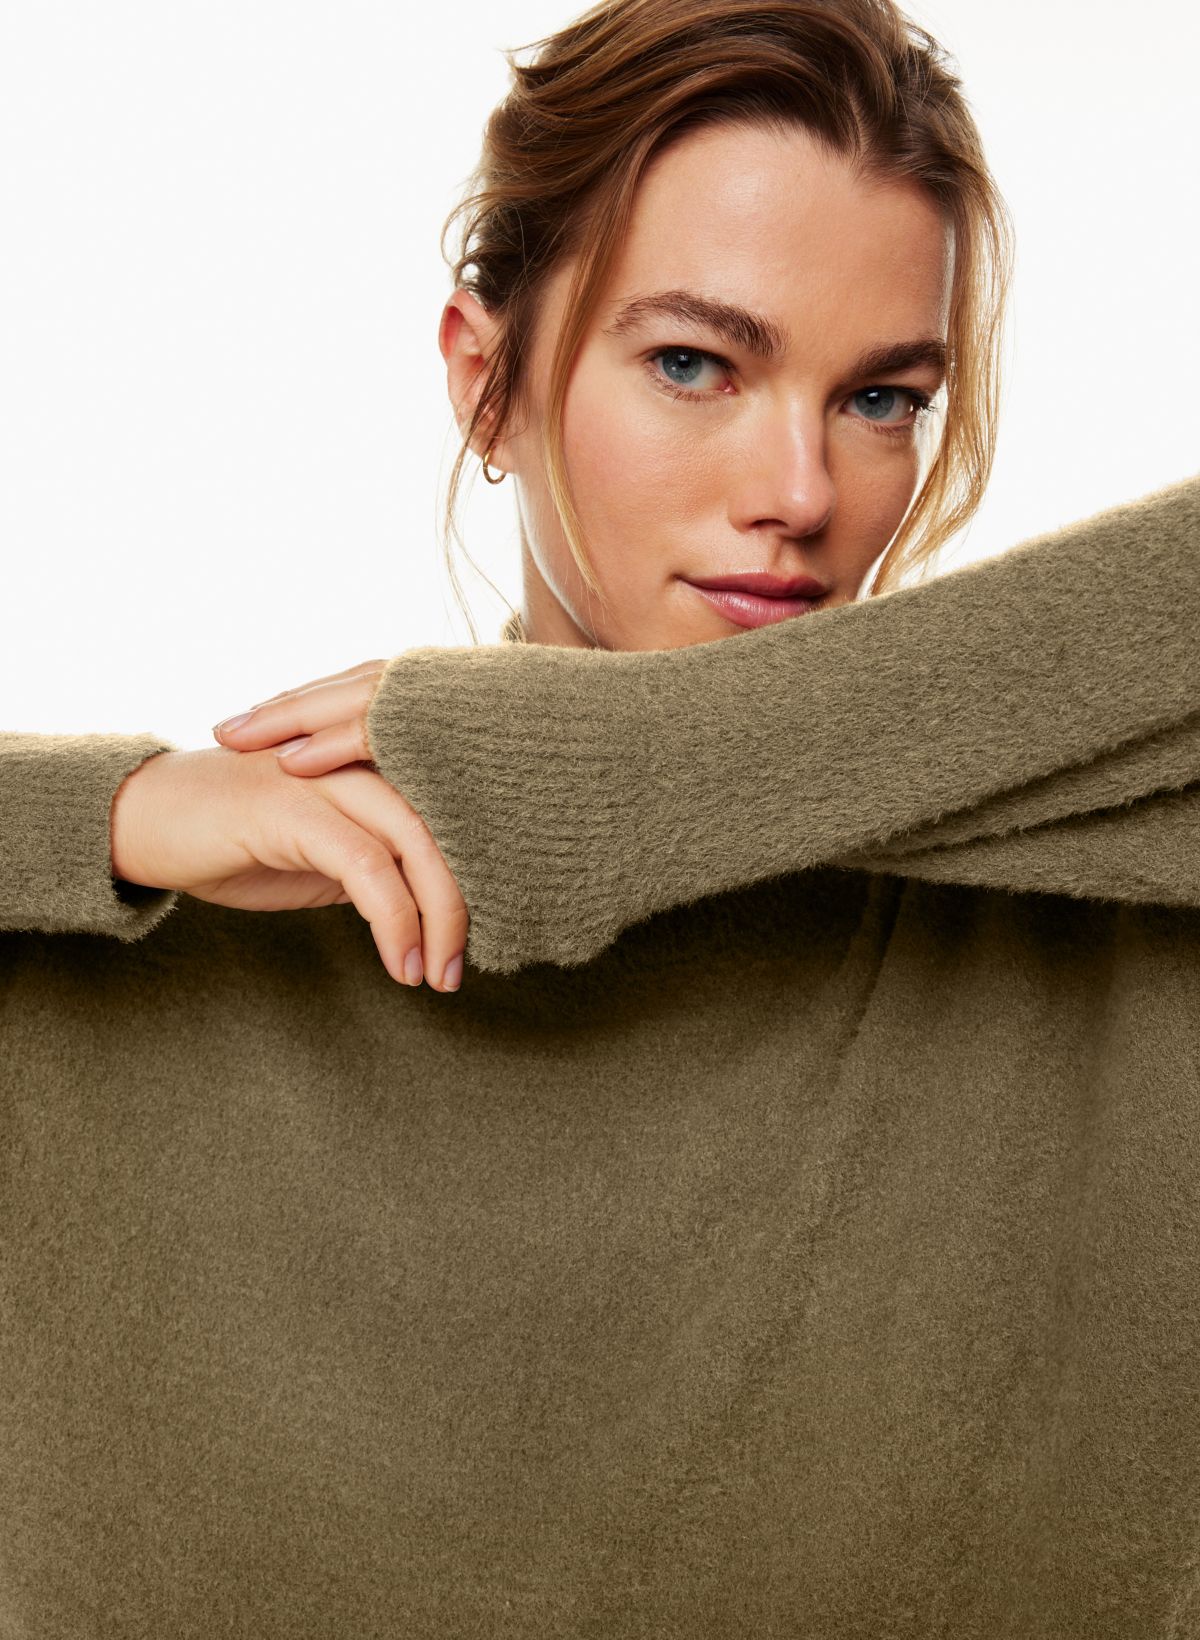 Taupe Turtleneck Soft Sweater